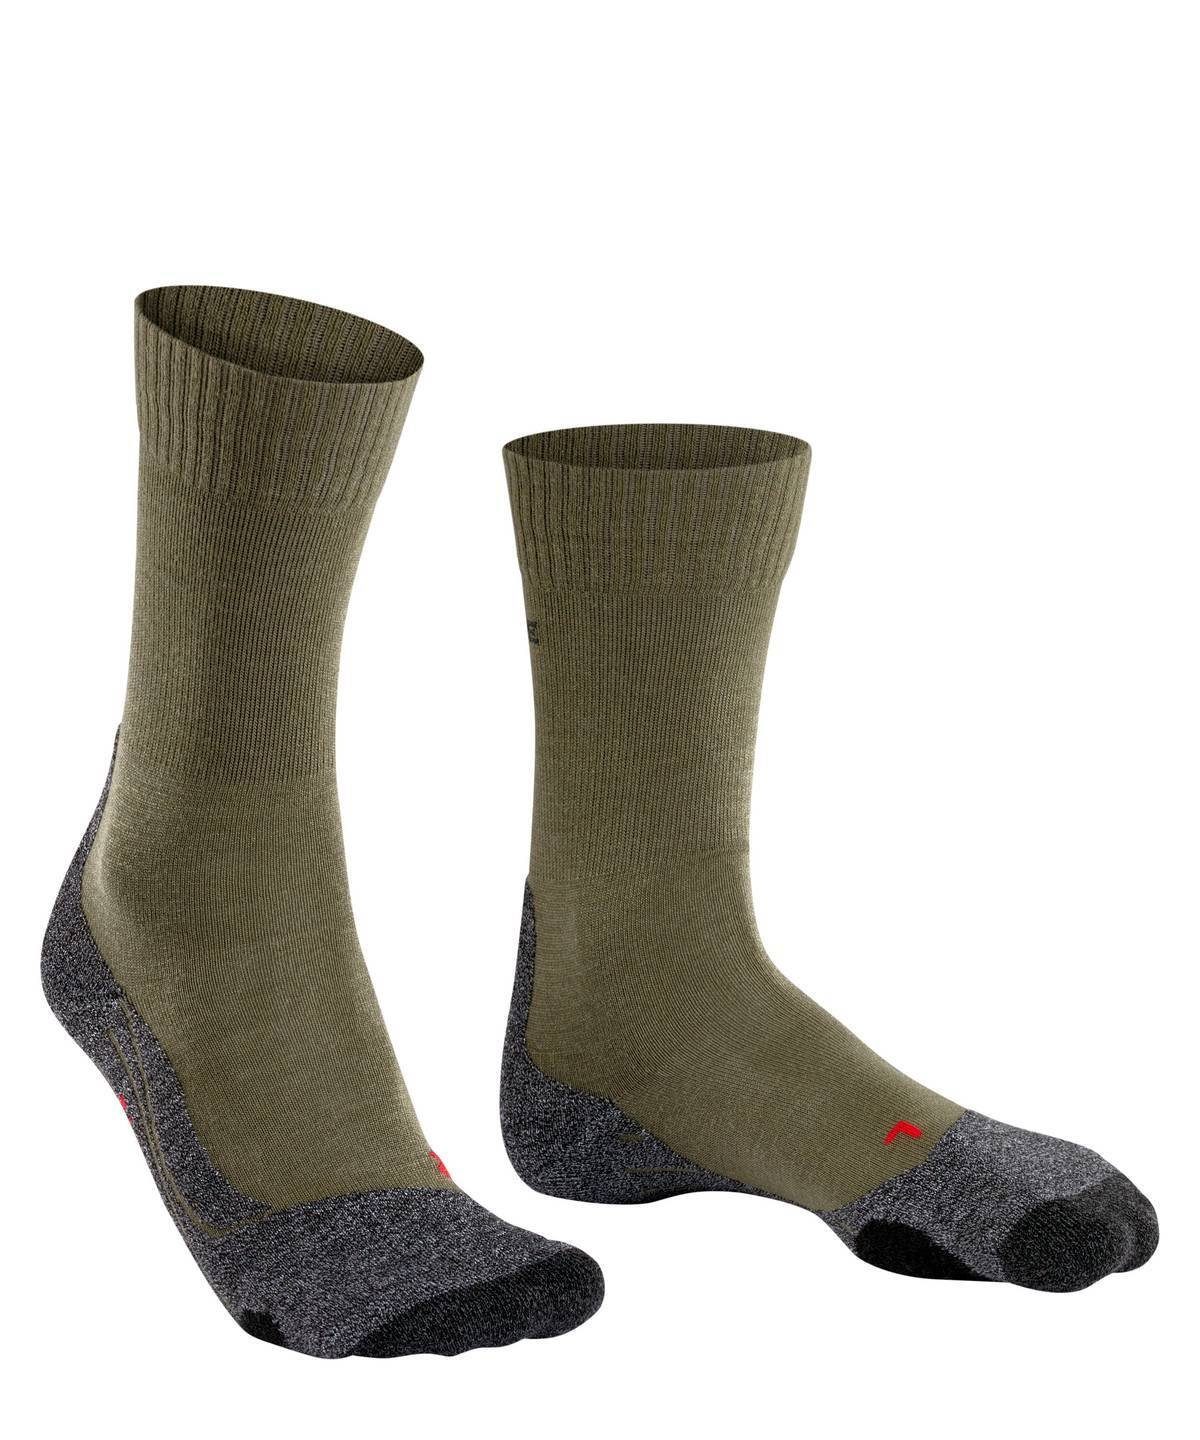 Herren Sportsocken Polsterung TK2, - FALKE Trekking Socken Socken Olivgrün